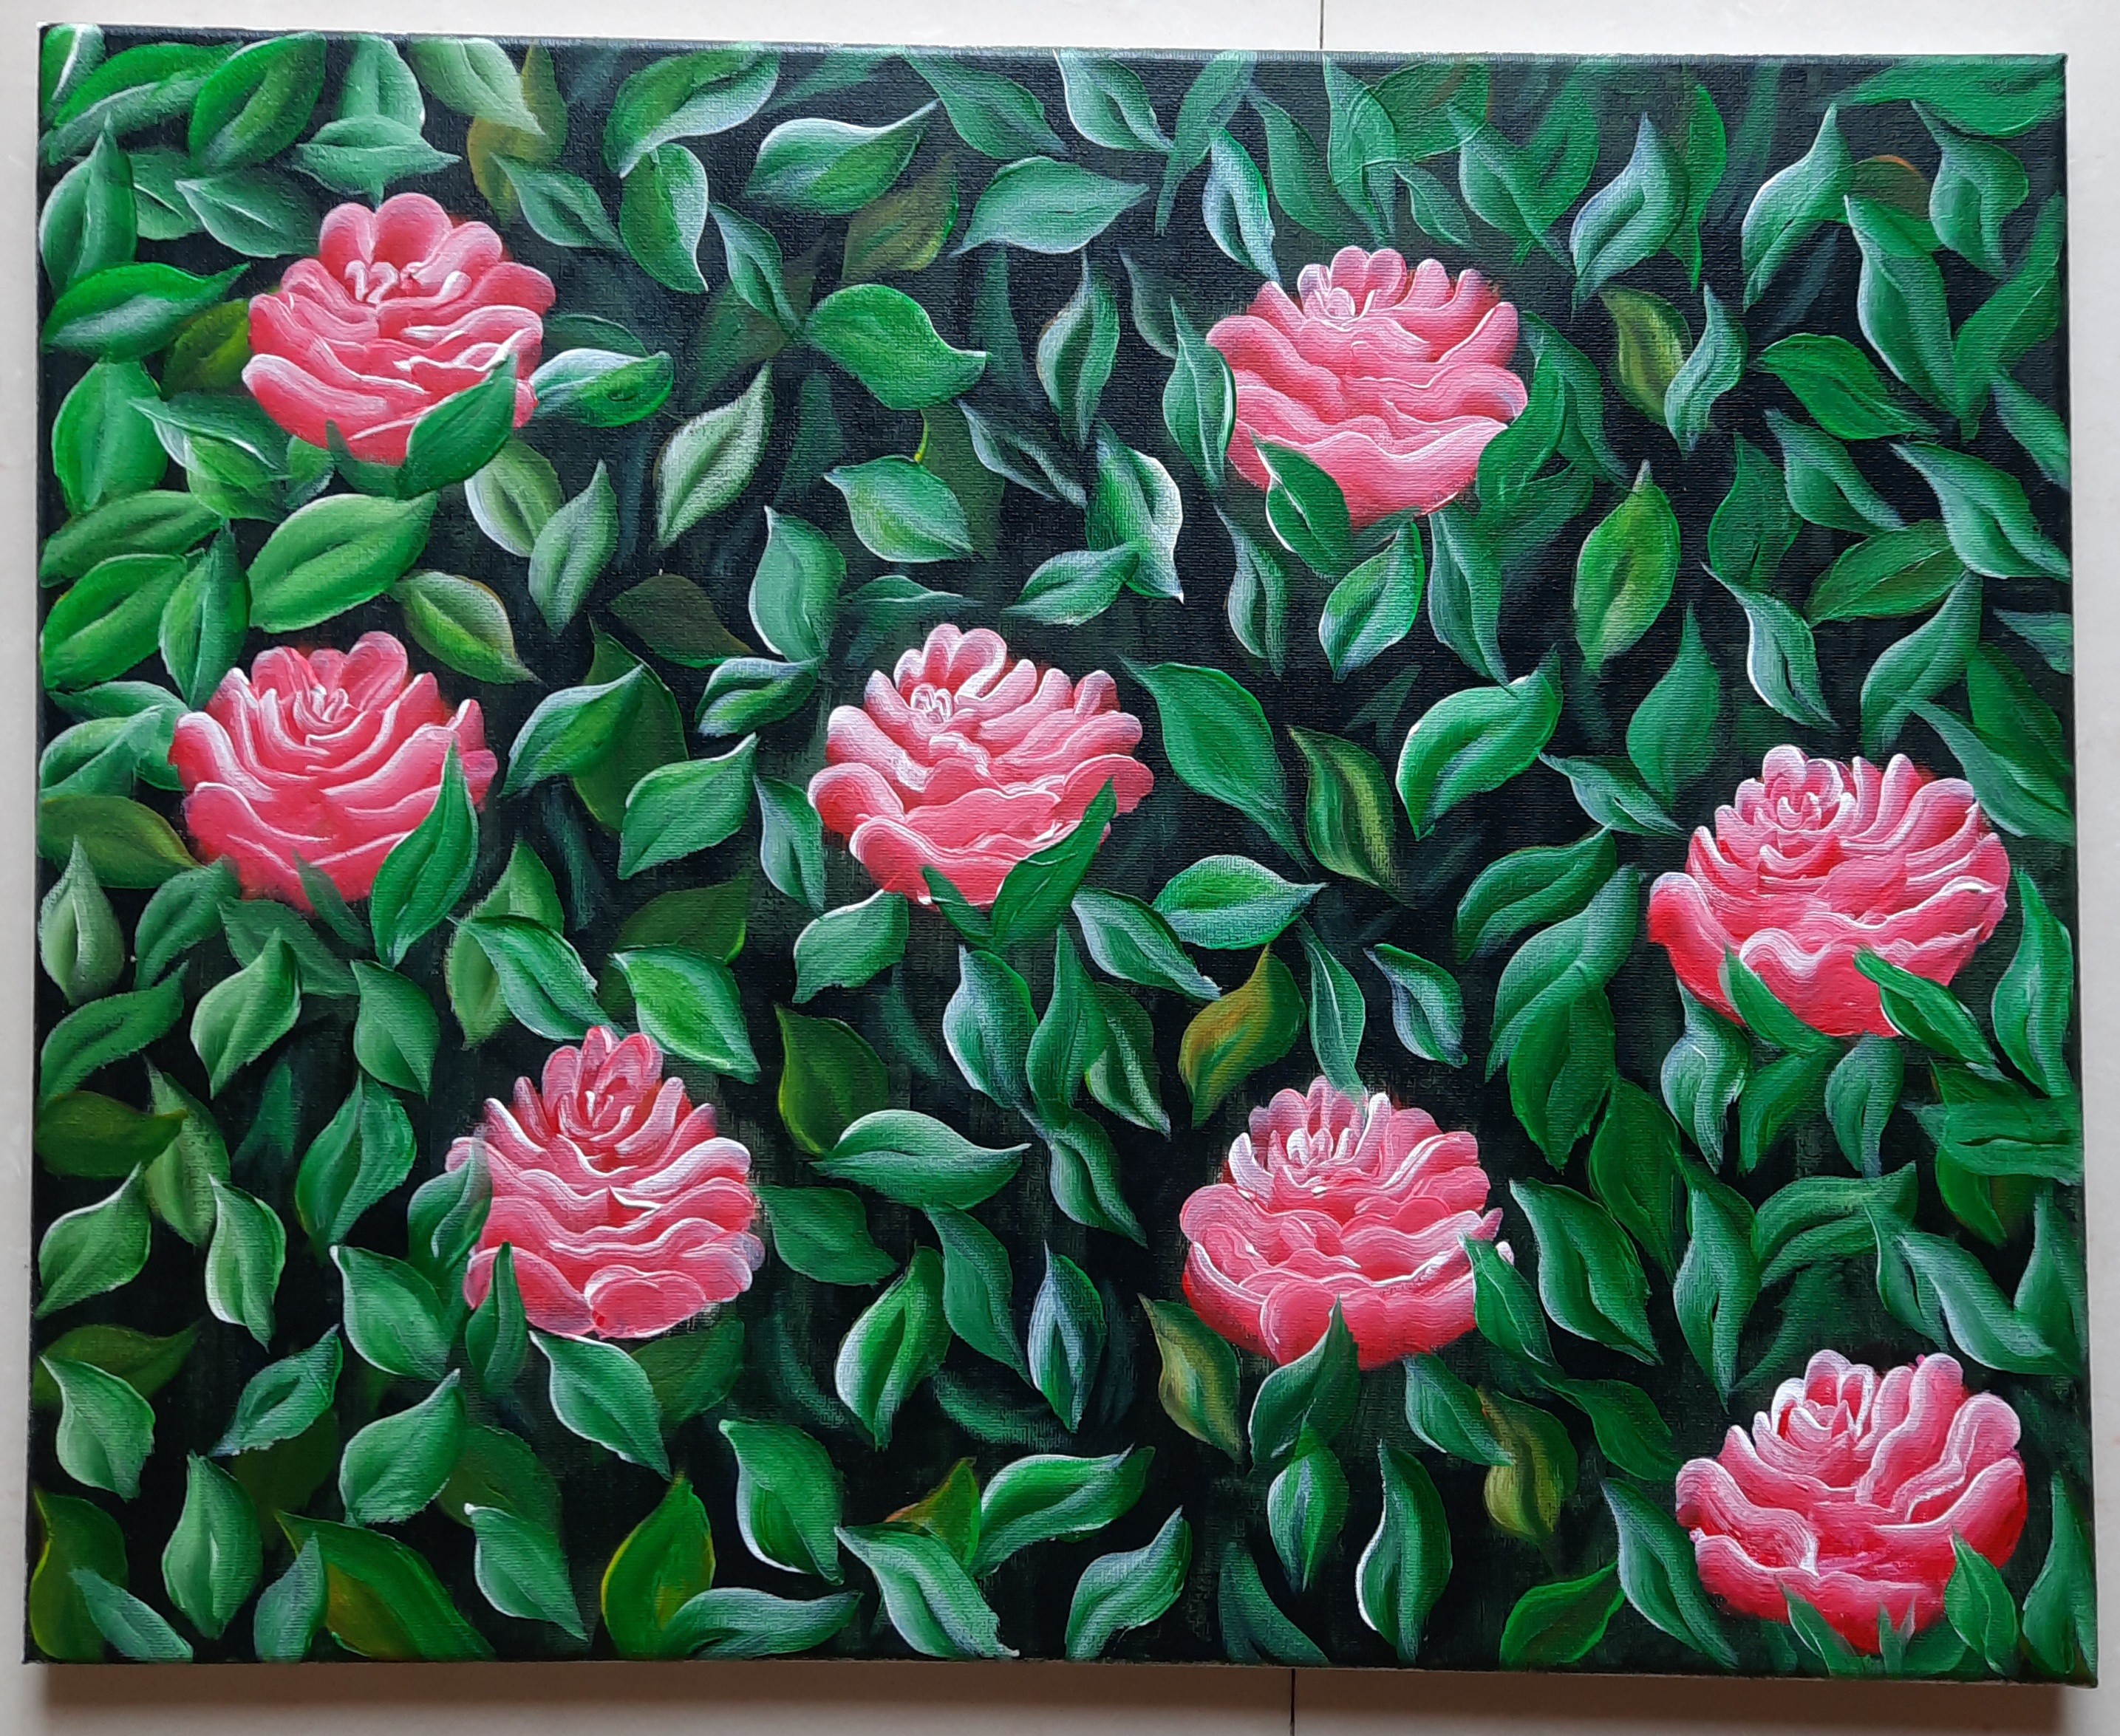 Bed of roses by Roshan Fernando